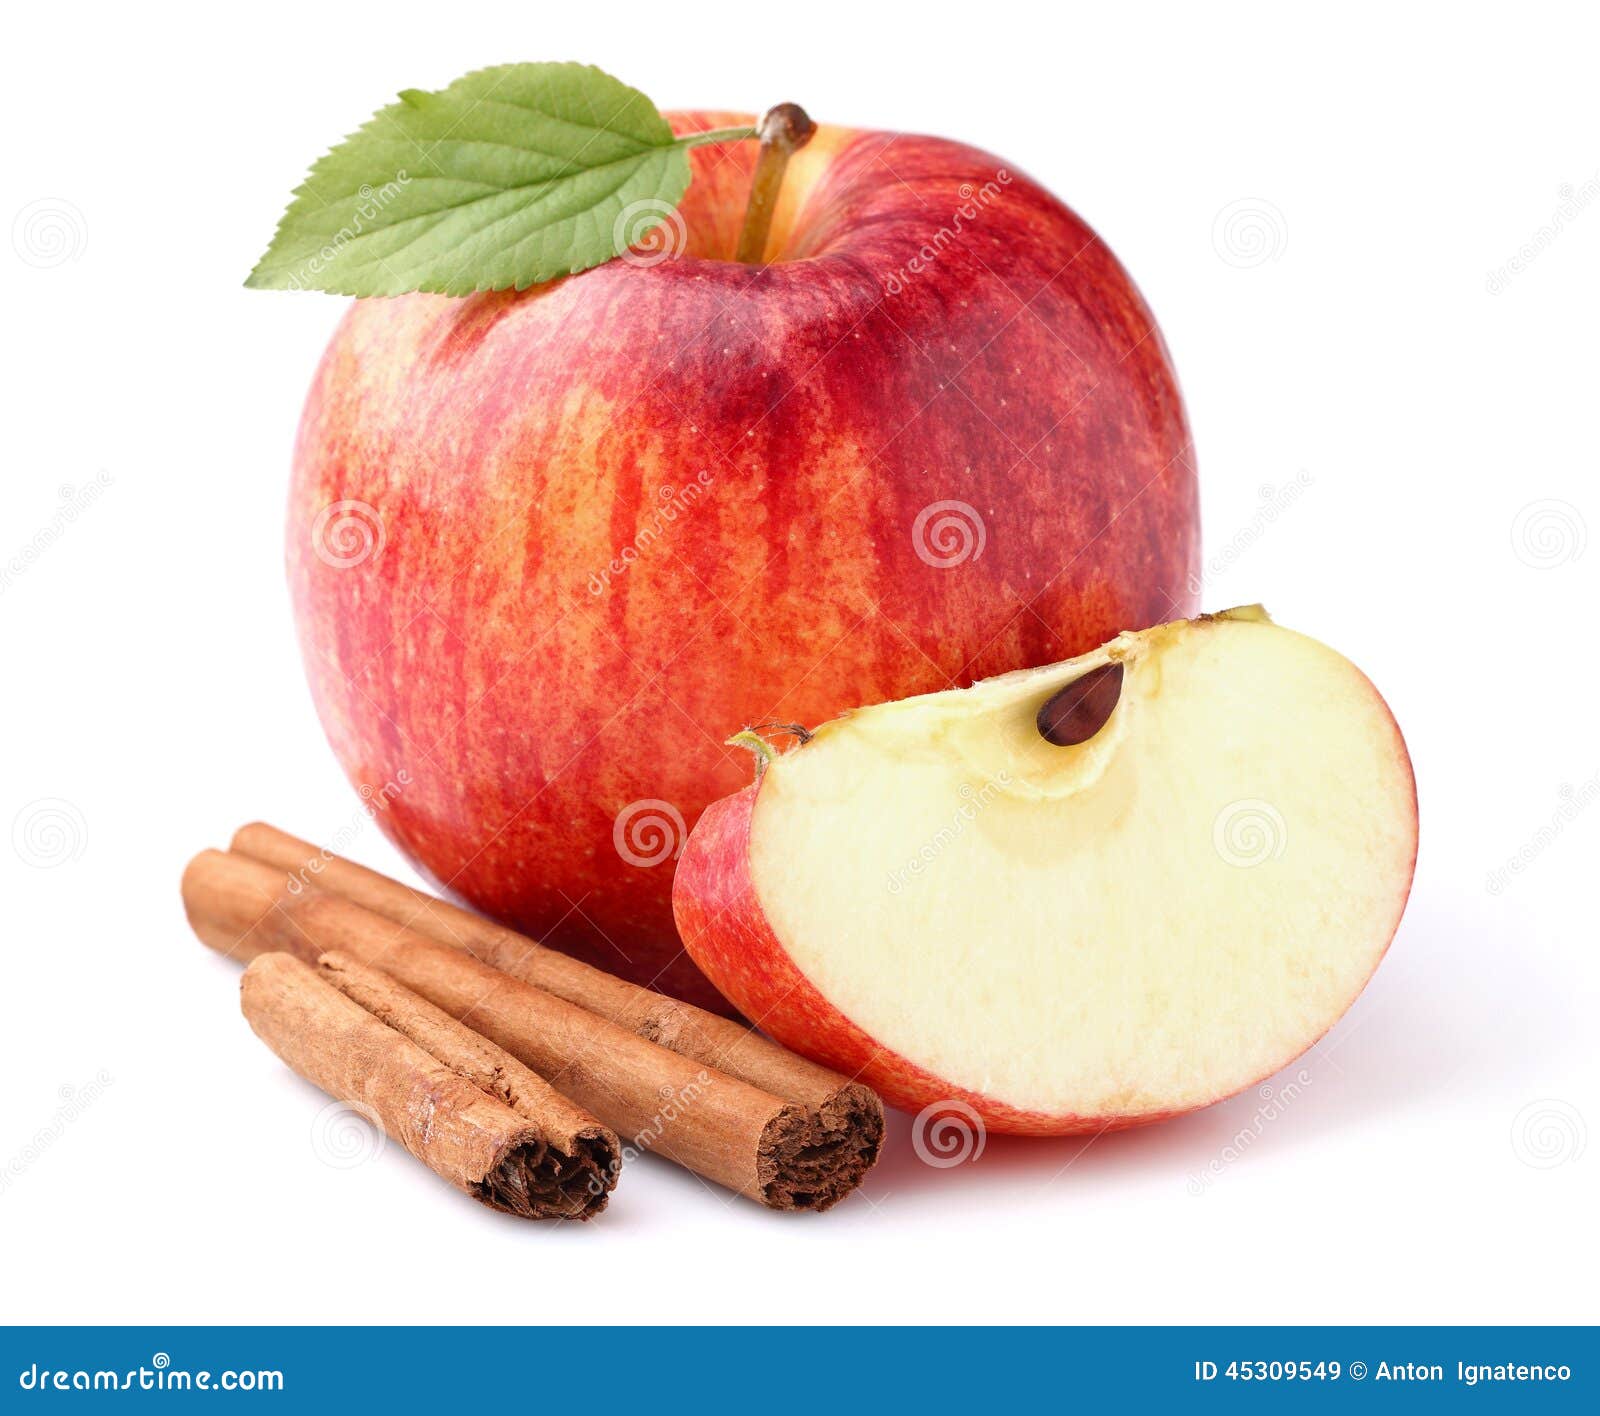 apple with cinnamon